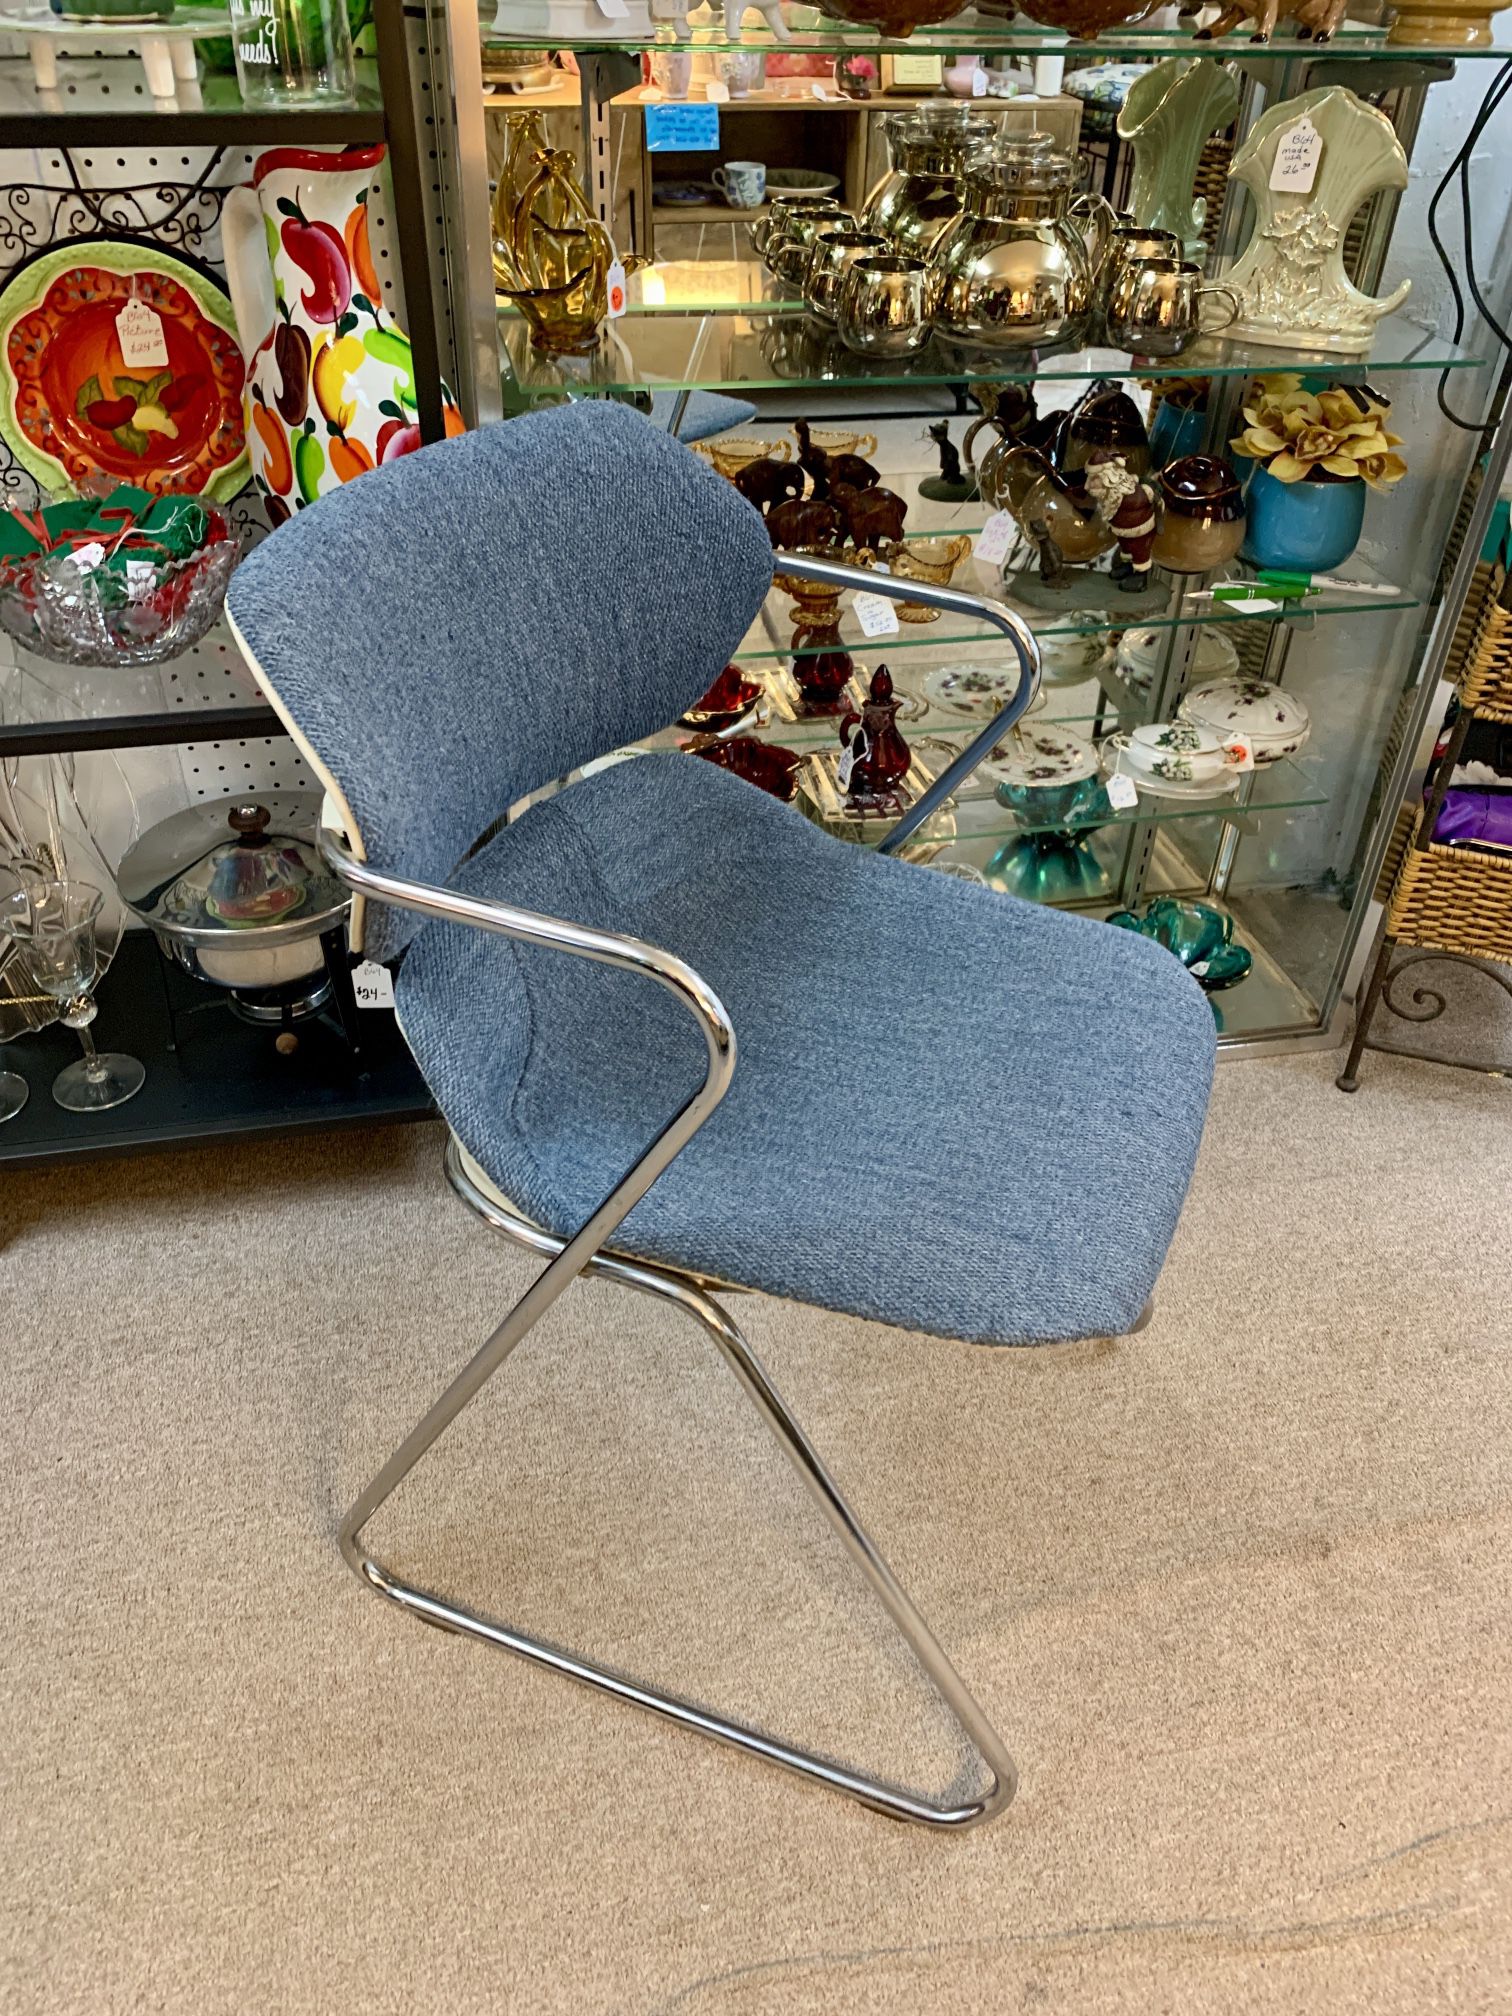 Vintage Hugh Acton chrome chair.  Visit EN Miller Antique Mall in Verona. 